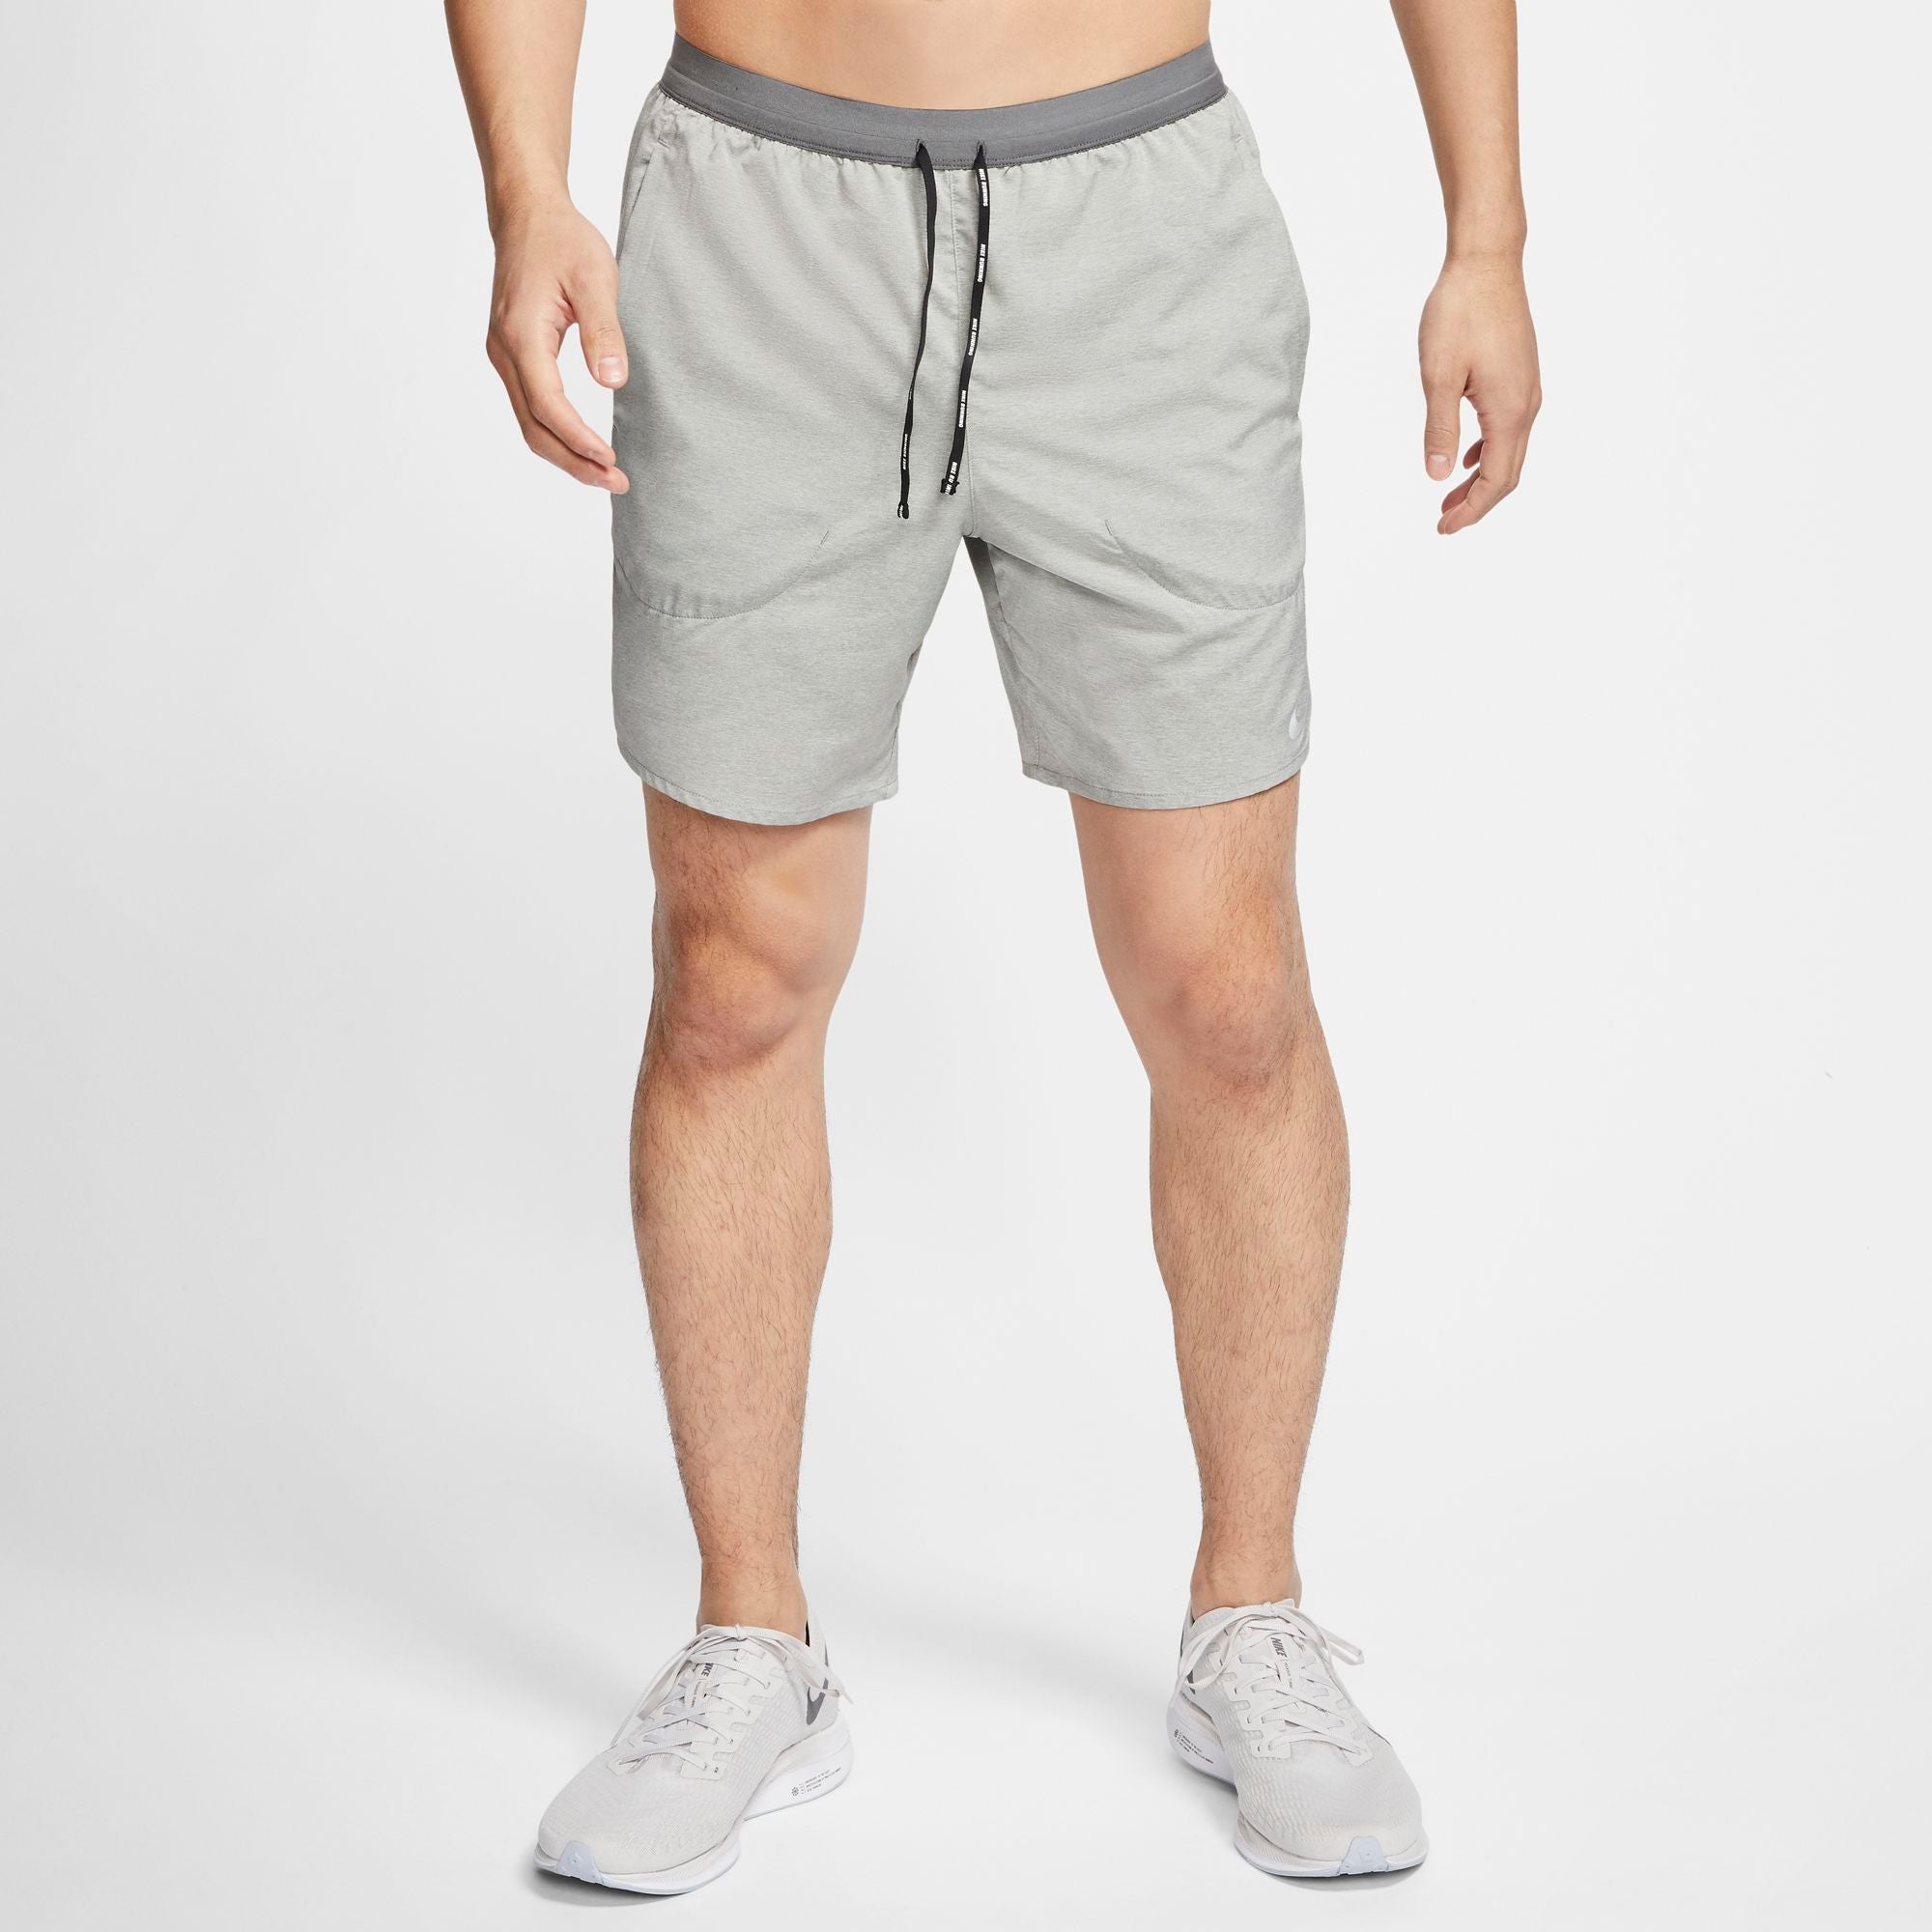 Nike Flex Stride 7 Inch Shorts Mens APPAREL - Mens Shorts IRON GREY/REFLECTIVE SILVER